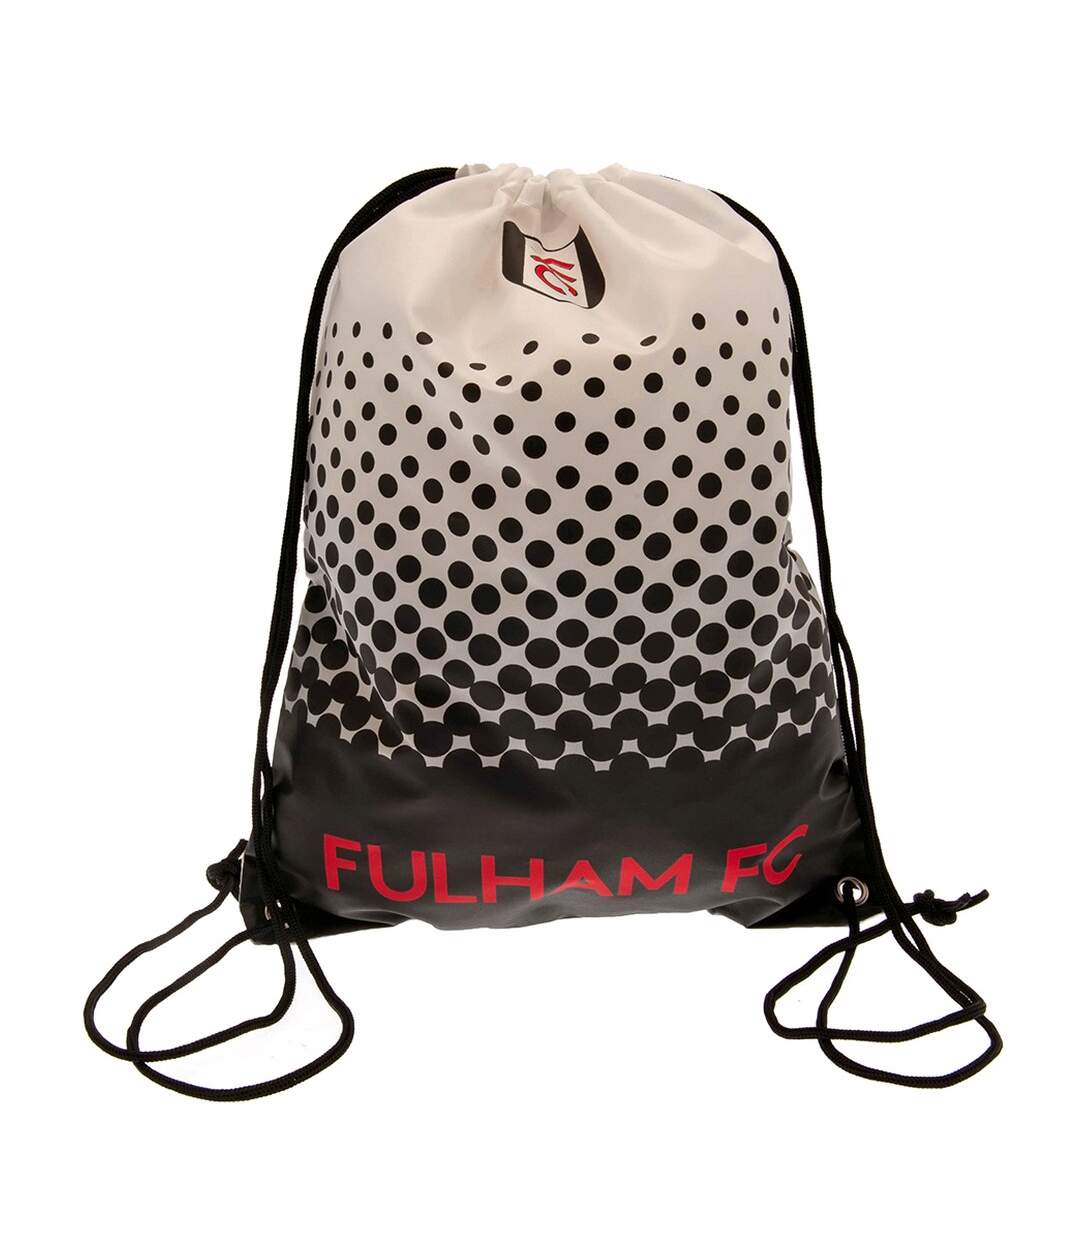 Fulham FC Drawstring Bag (Black/White) (One Size)